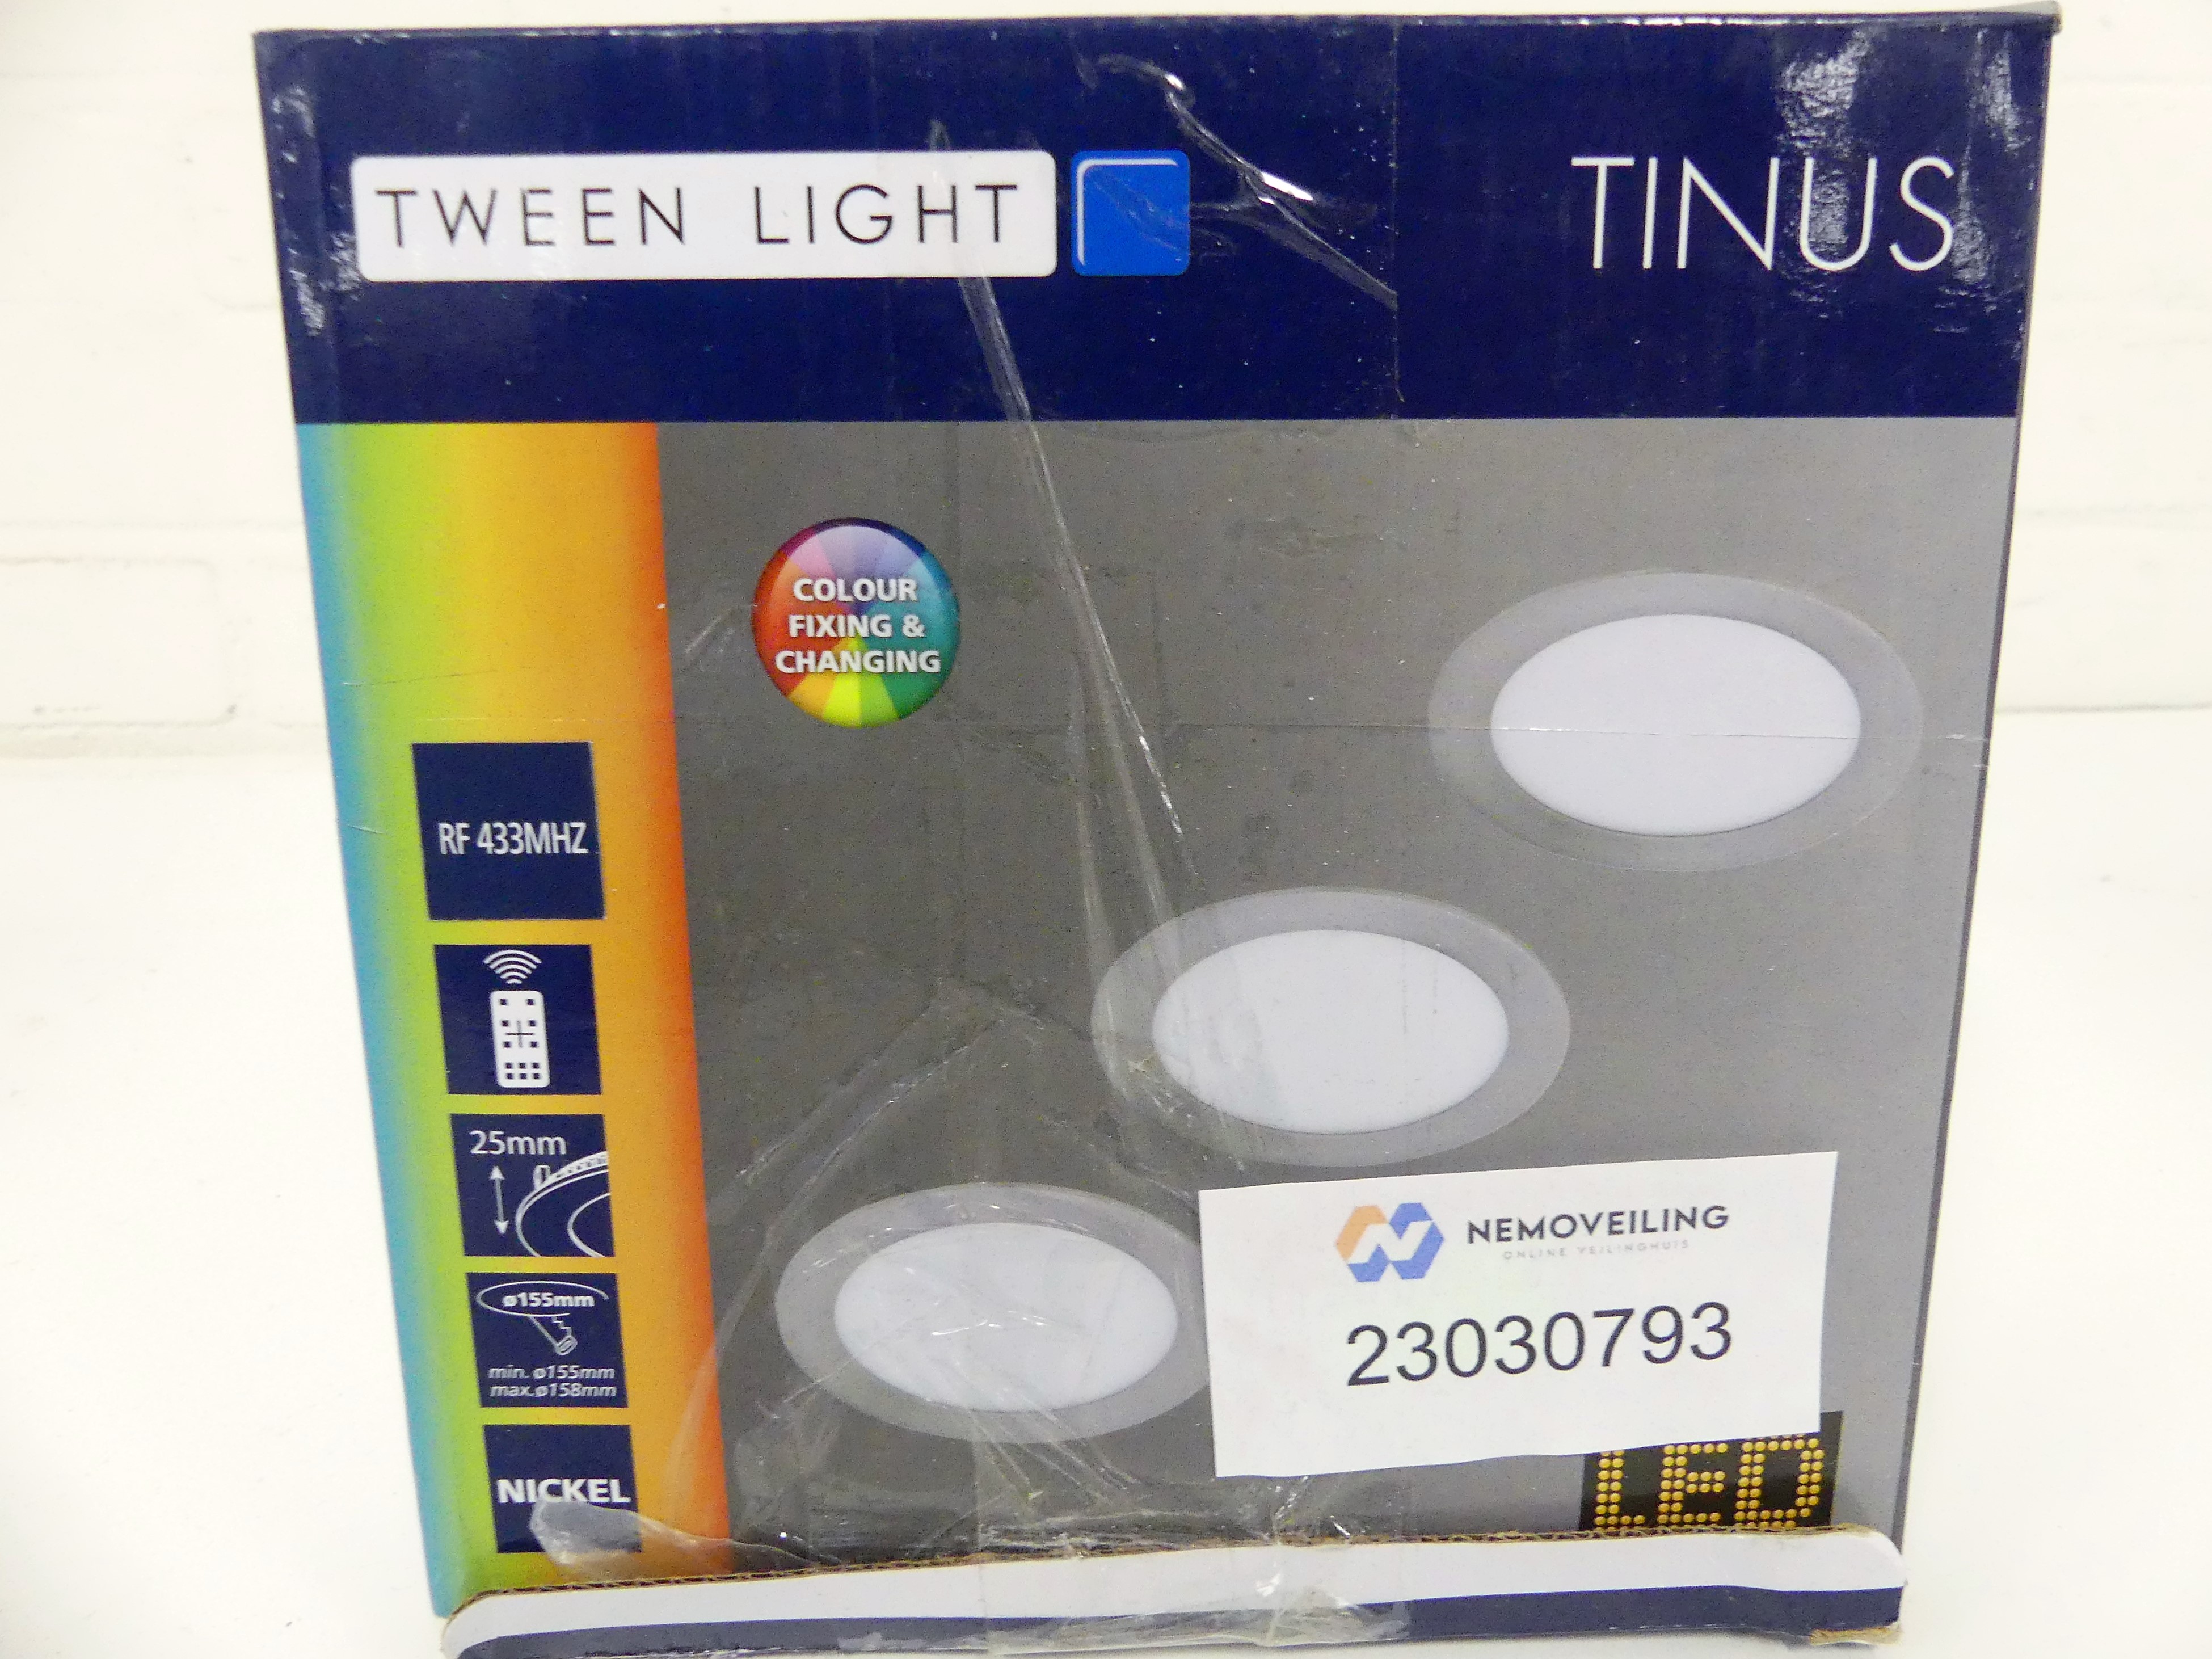 Tween lights inbouwspots Tinus 4,8W 155mm, Colour fixing & changing   